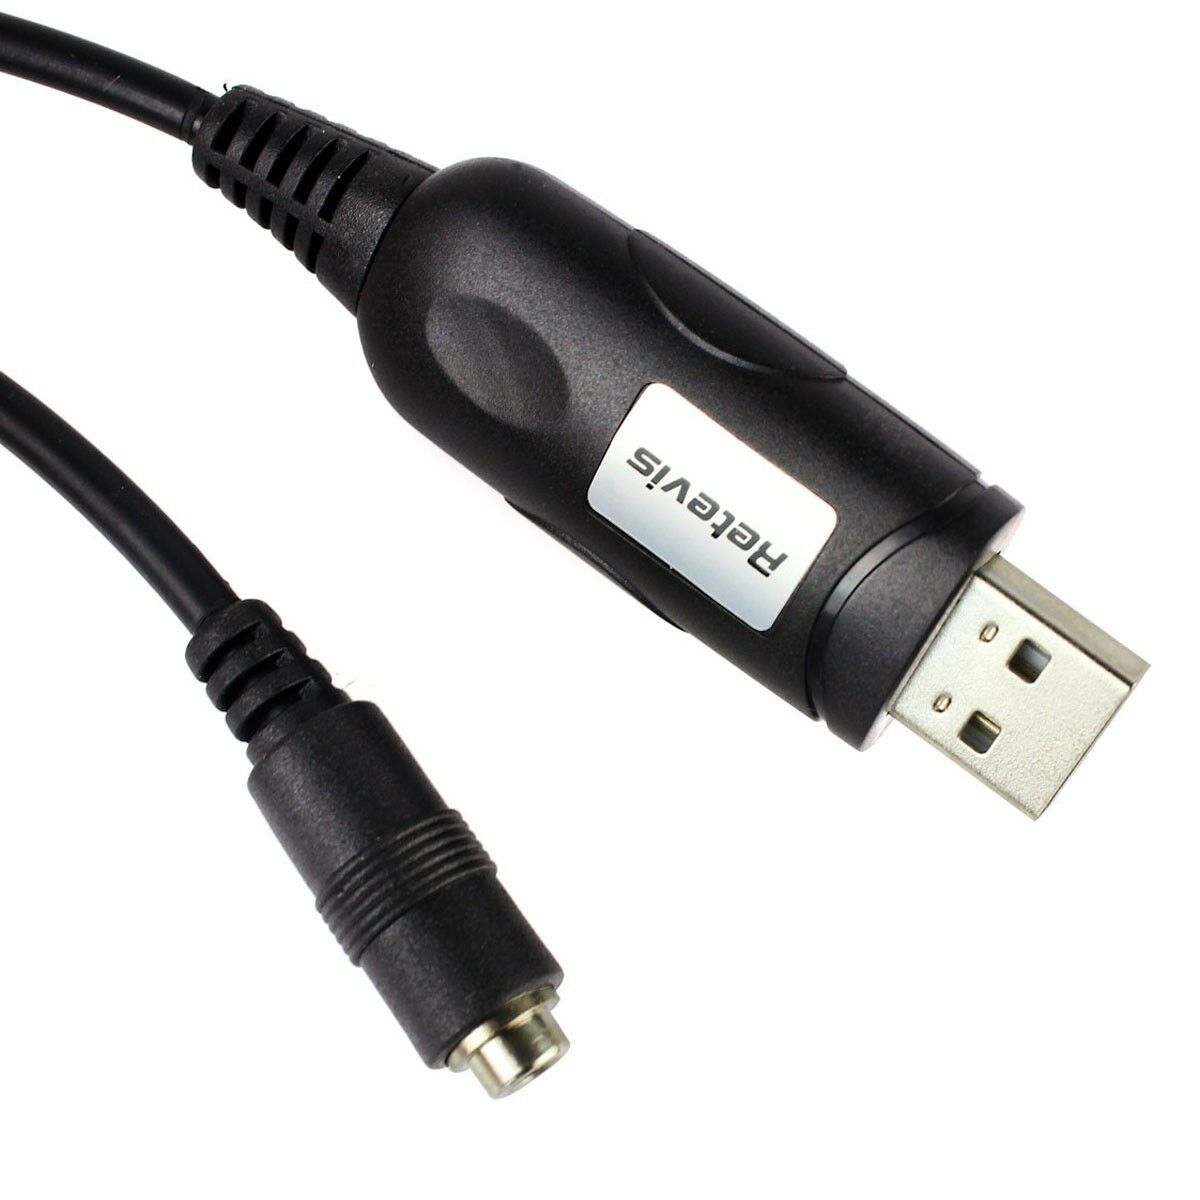 USB Programming Cables for Motorola Kenwood Radios